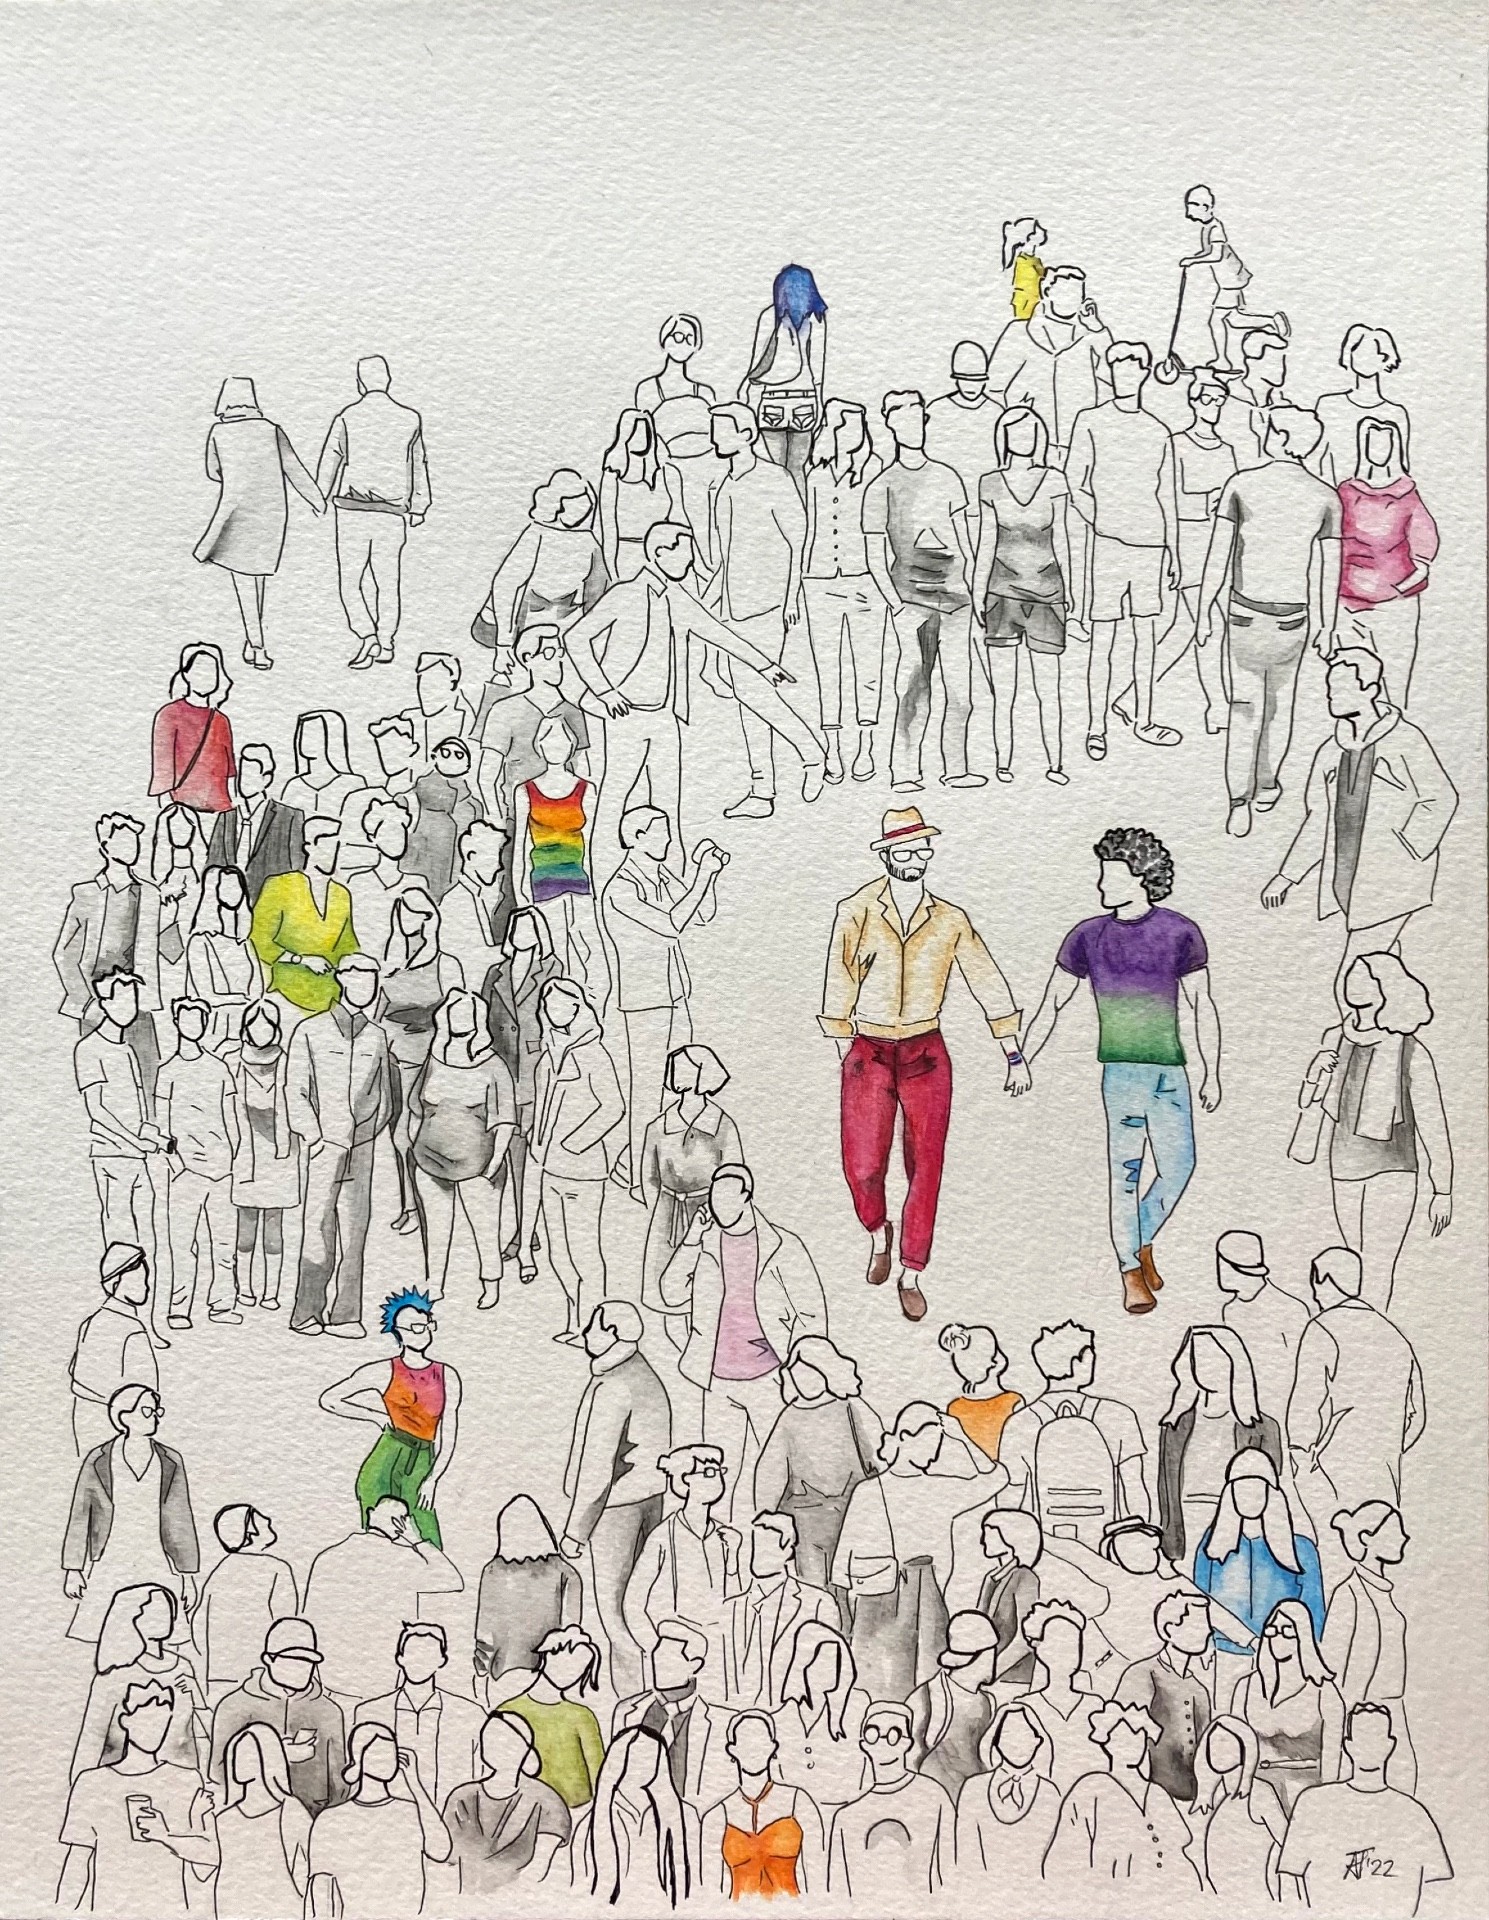 “Colors of Humanity” Arts Prize 2022 Community Artist Category Winner - Amrita Tandon